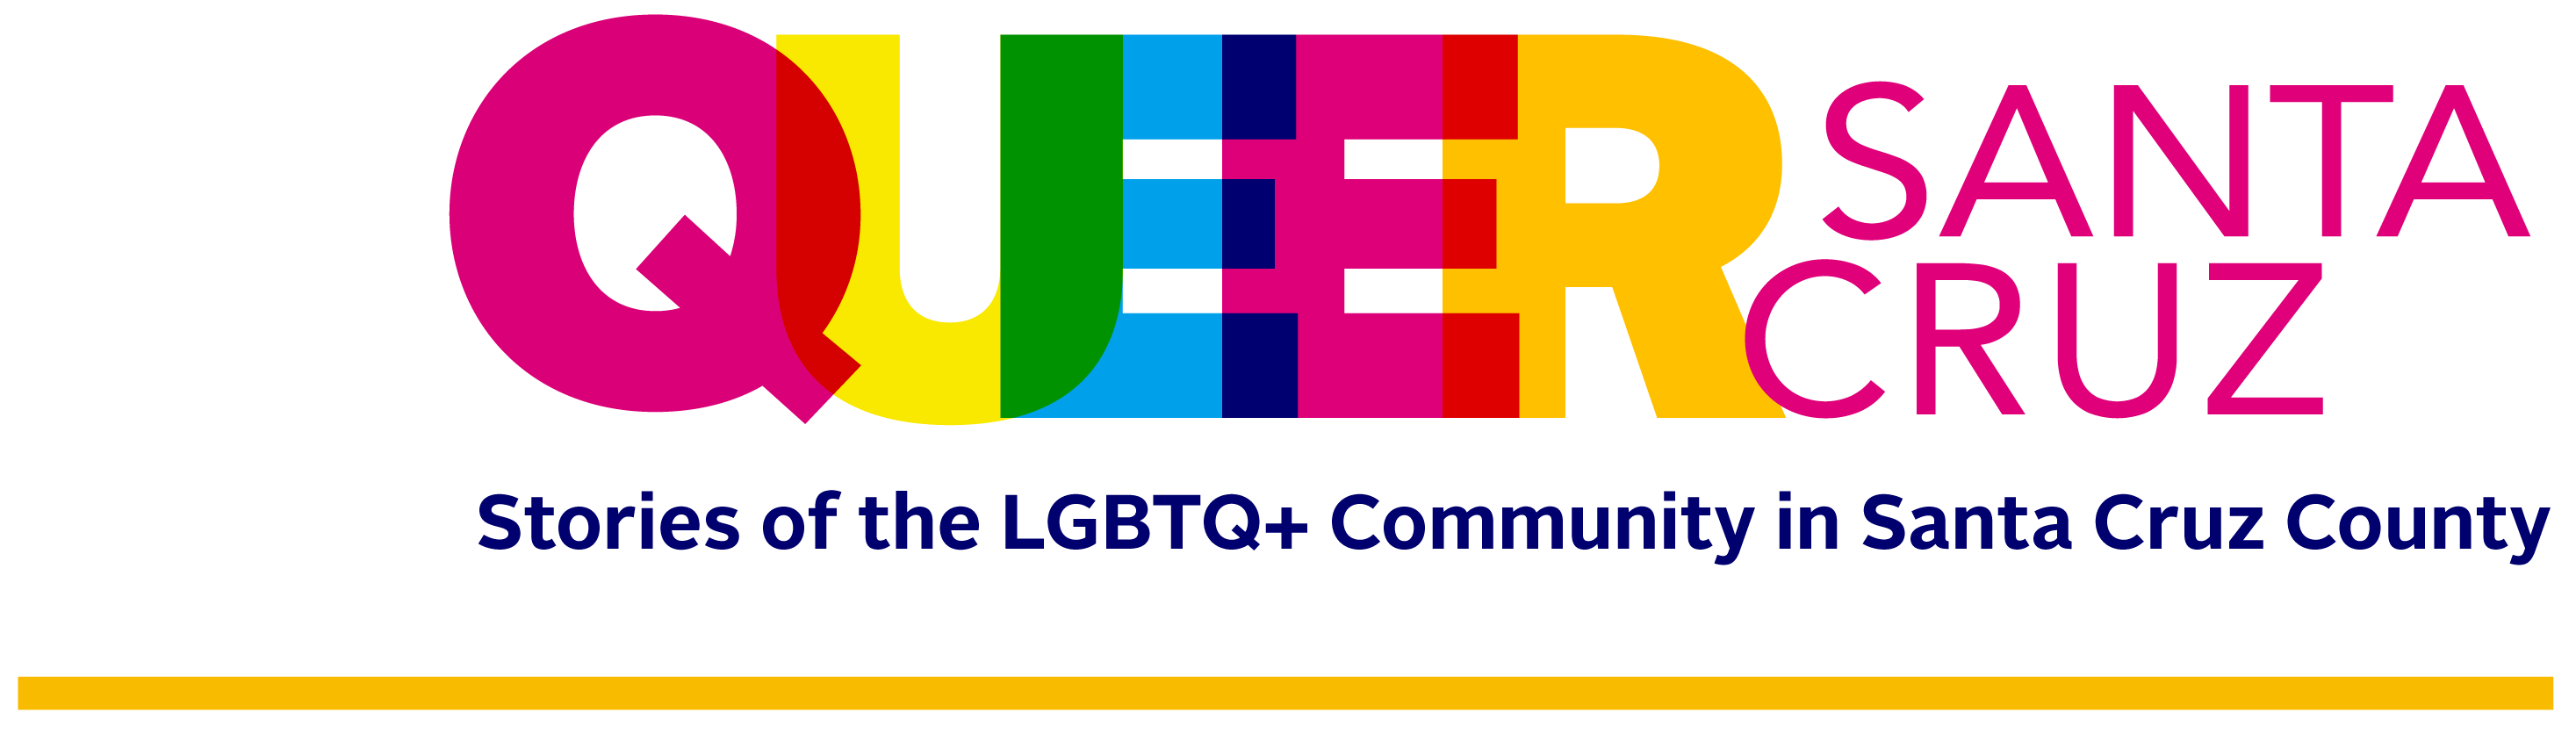 Queer Santa Cruz: Stories of the LGBTQ+ Community in Santa Cruz County